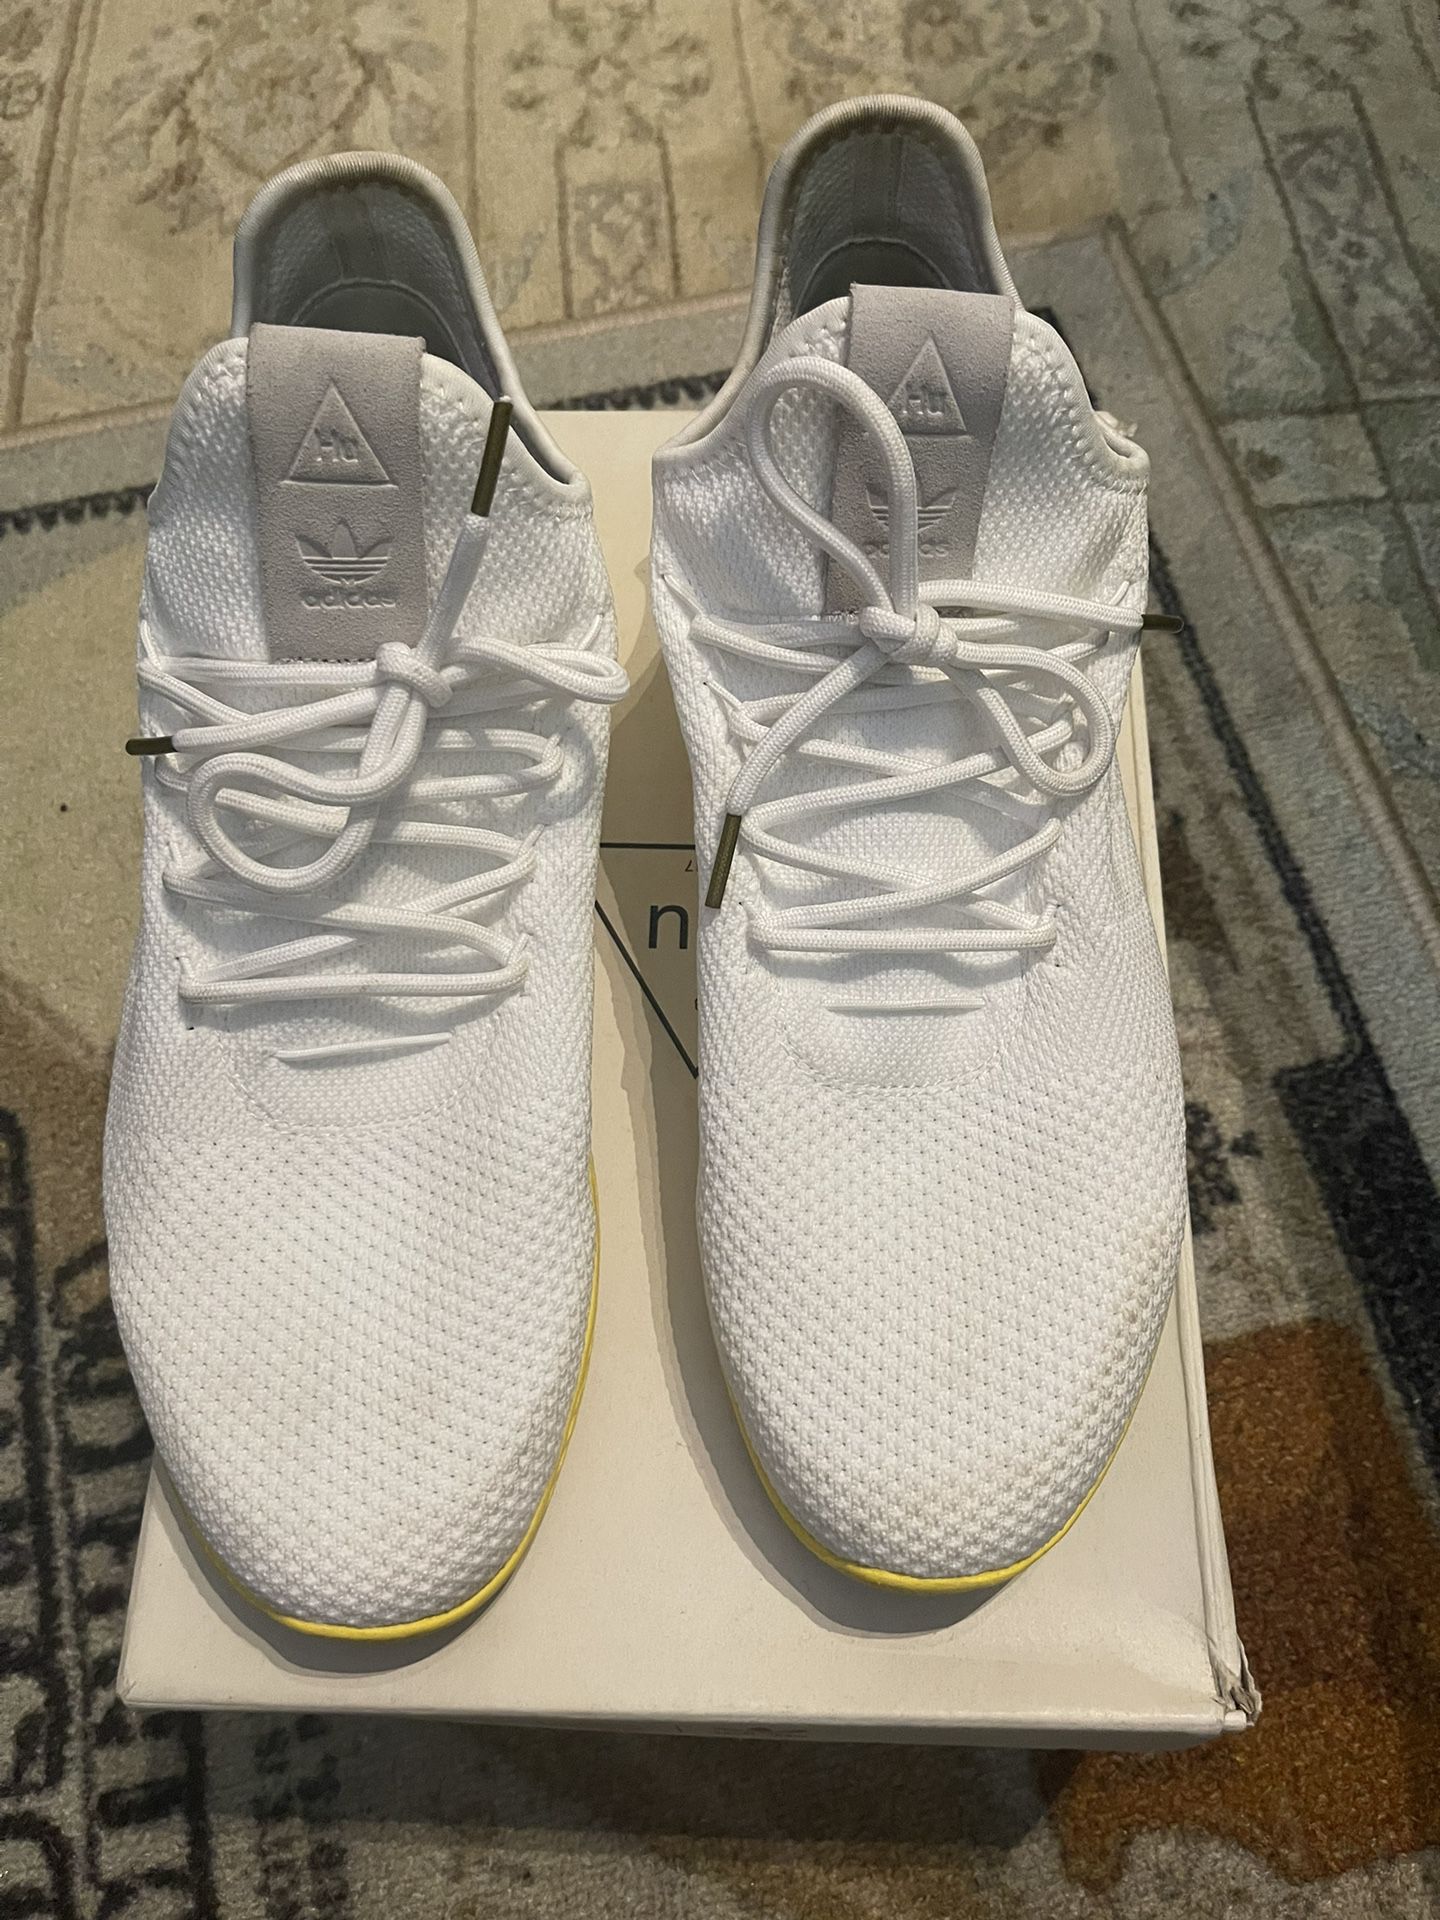 Adidas Pharrell Williams Tennis Hu Shoes Men's 11